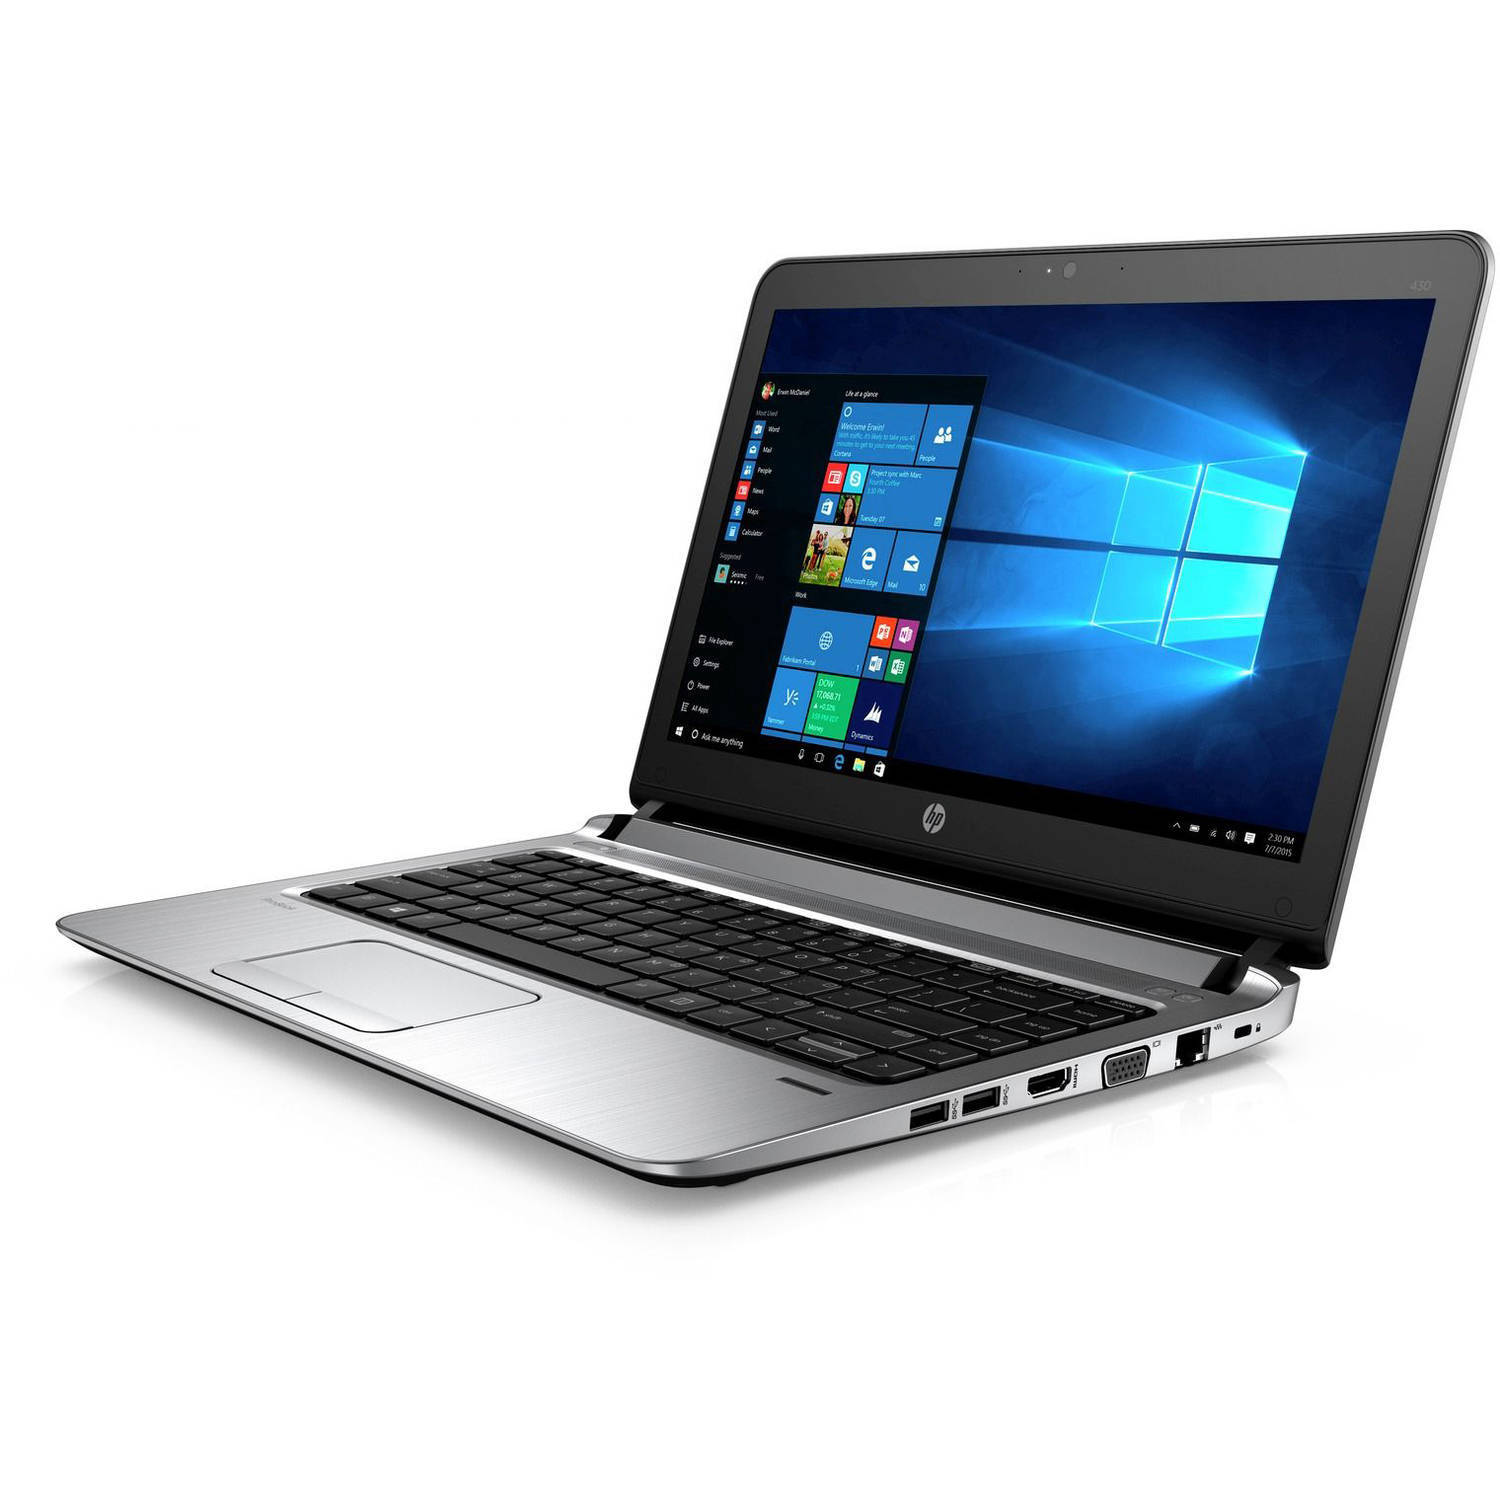 HP Probook 430 G3 13", i5-6200u, 8GB, 256GB SSD - Refurbished Good Condition